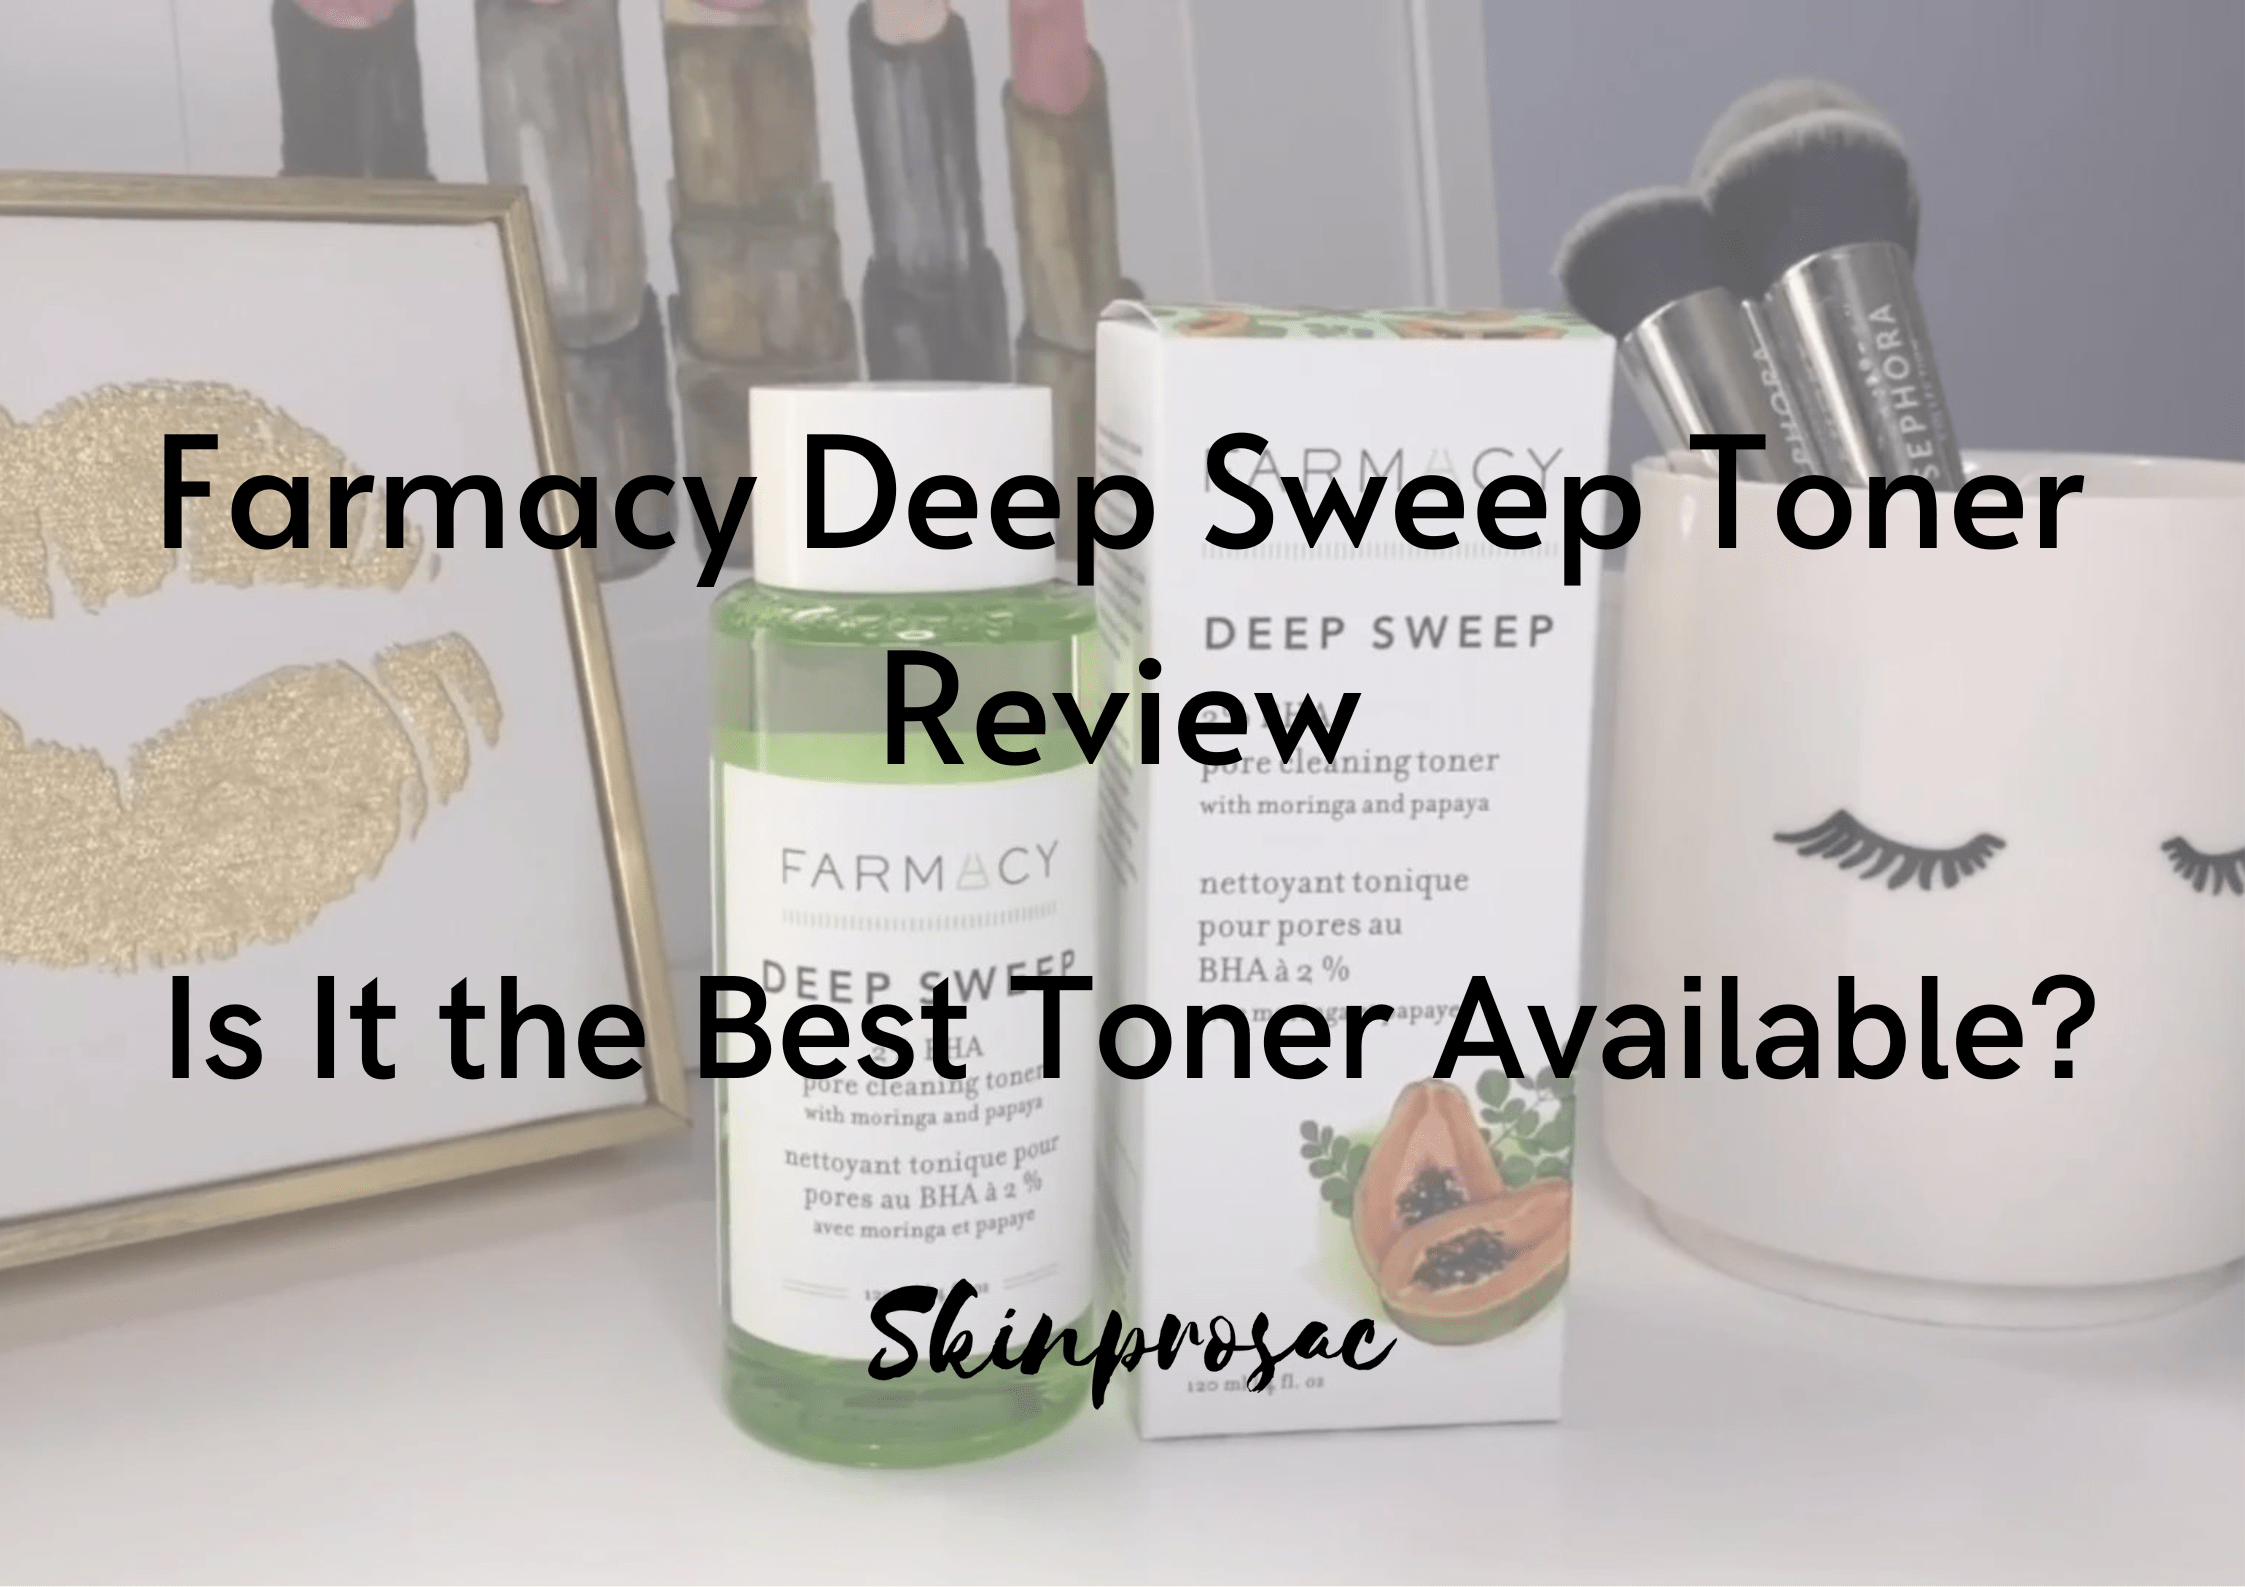 Farmacy Deep Sweep Toner review